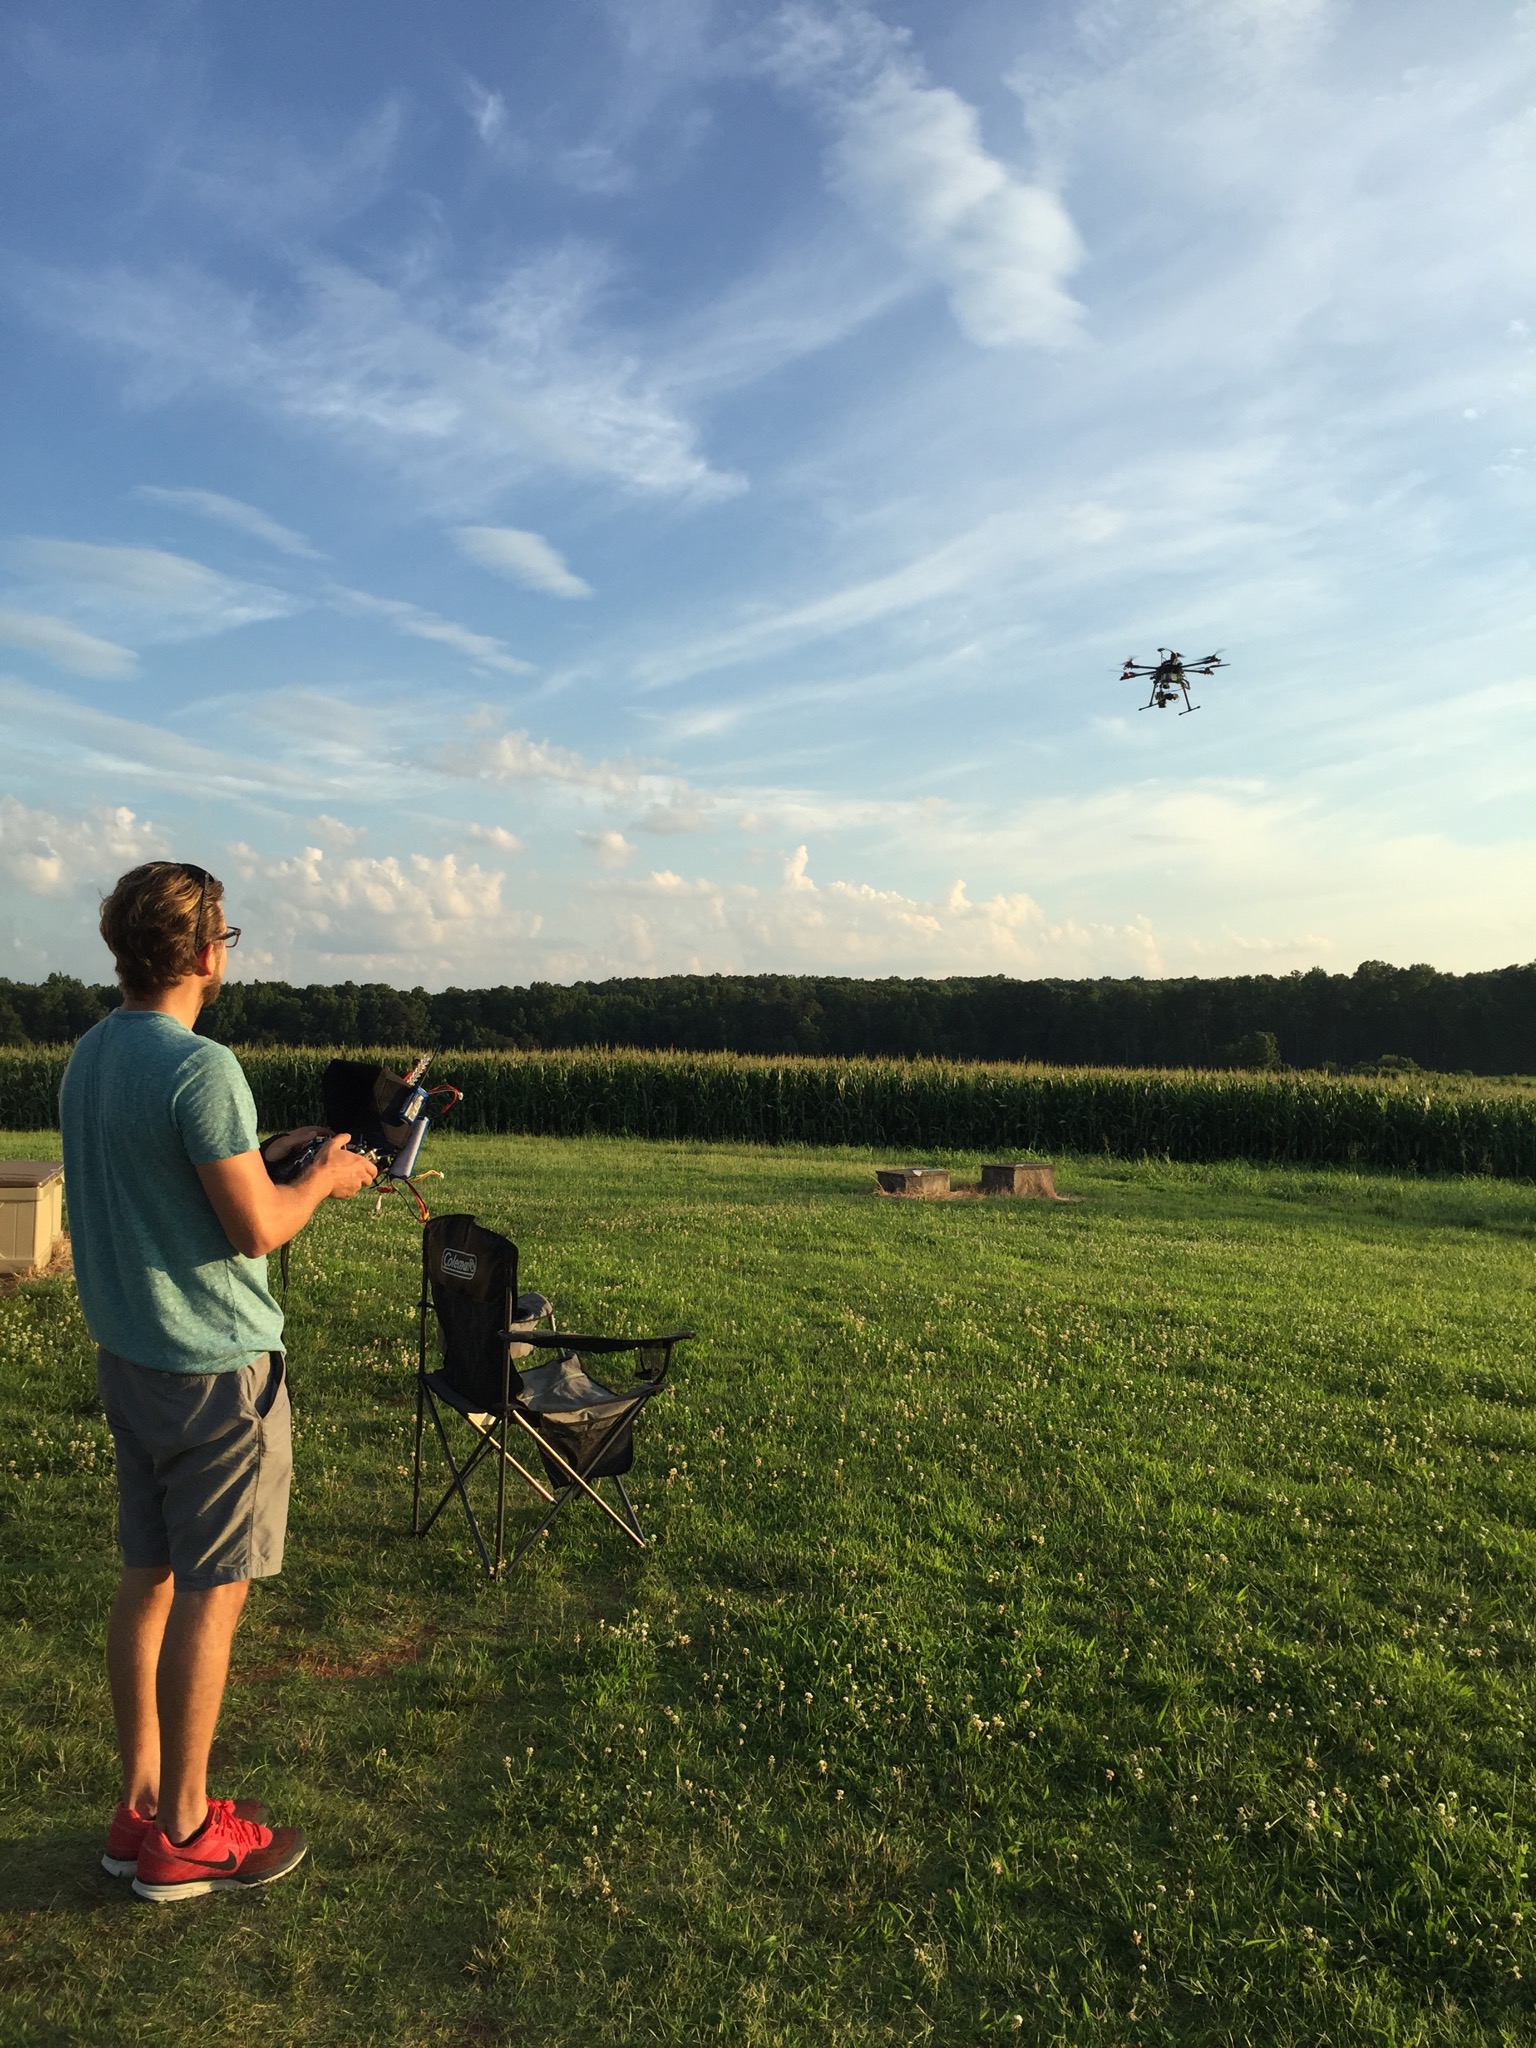 Skyler flying a drone.